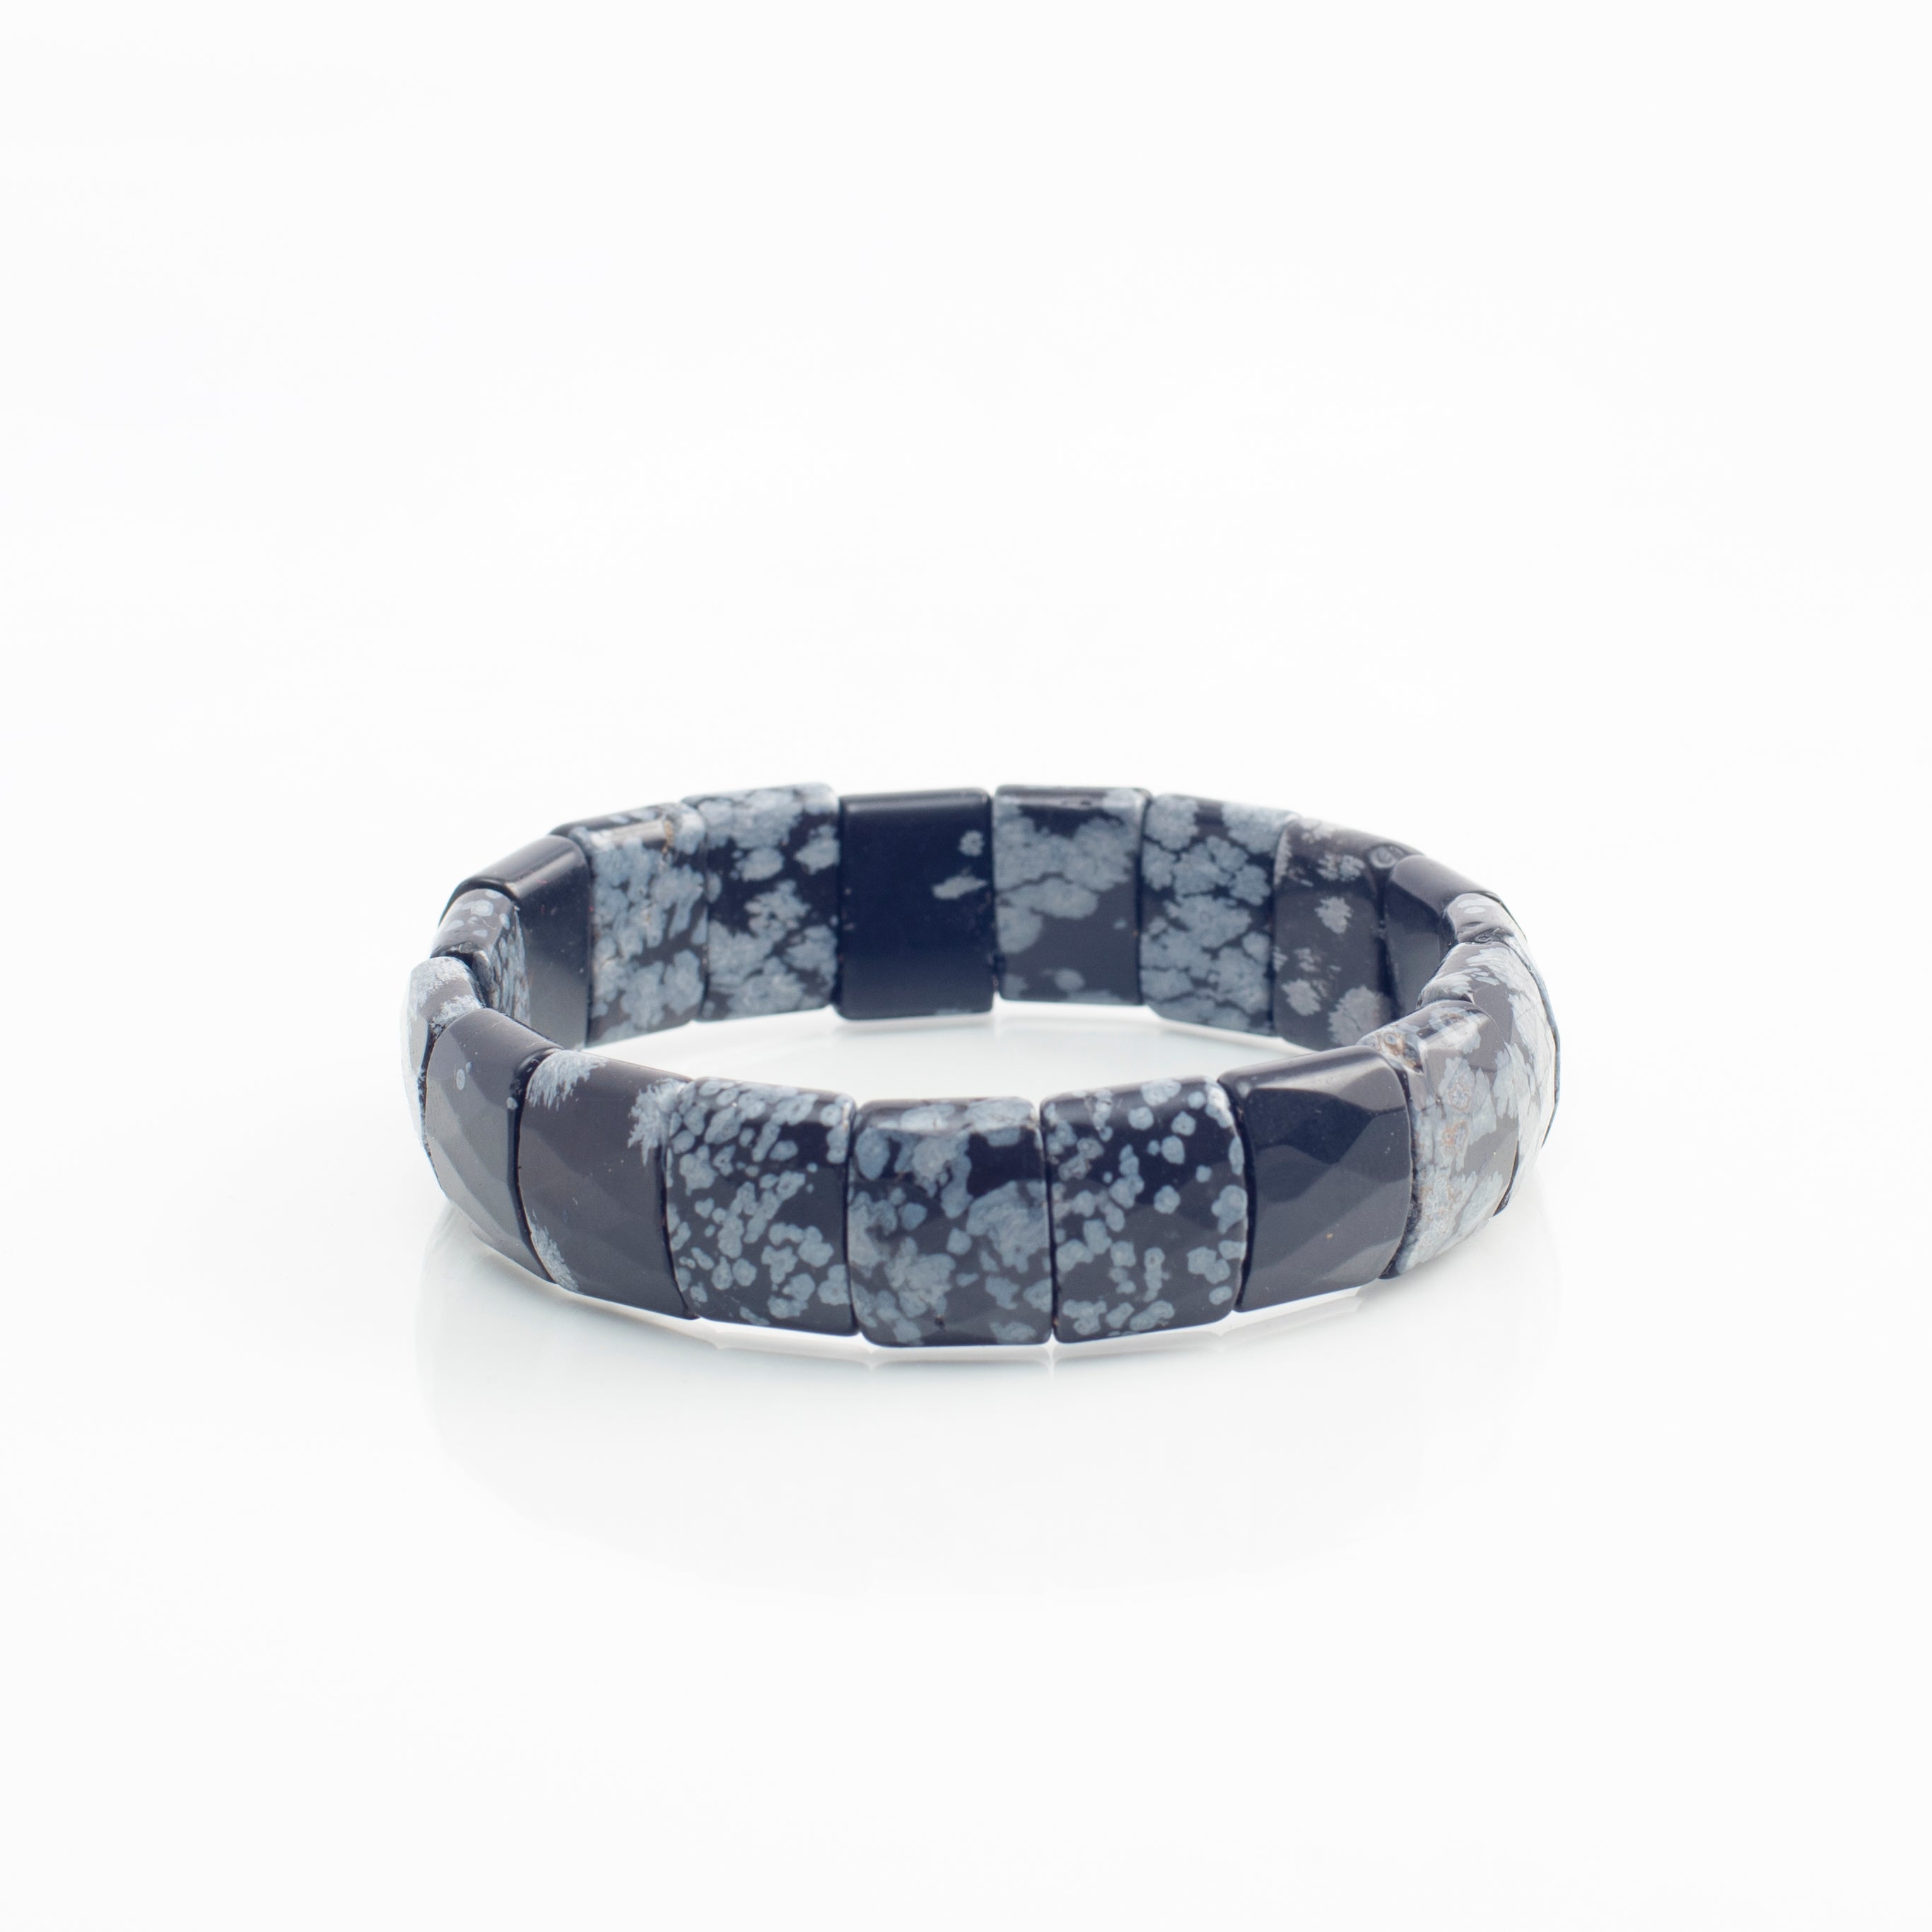 Snowflake Obsidian Square Beads Bracelet